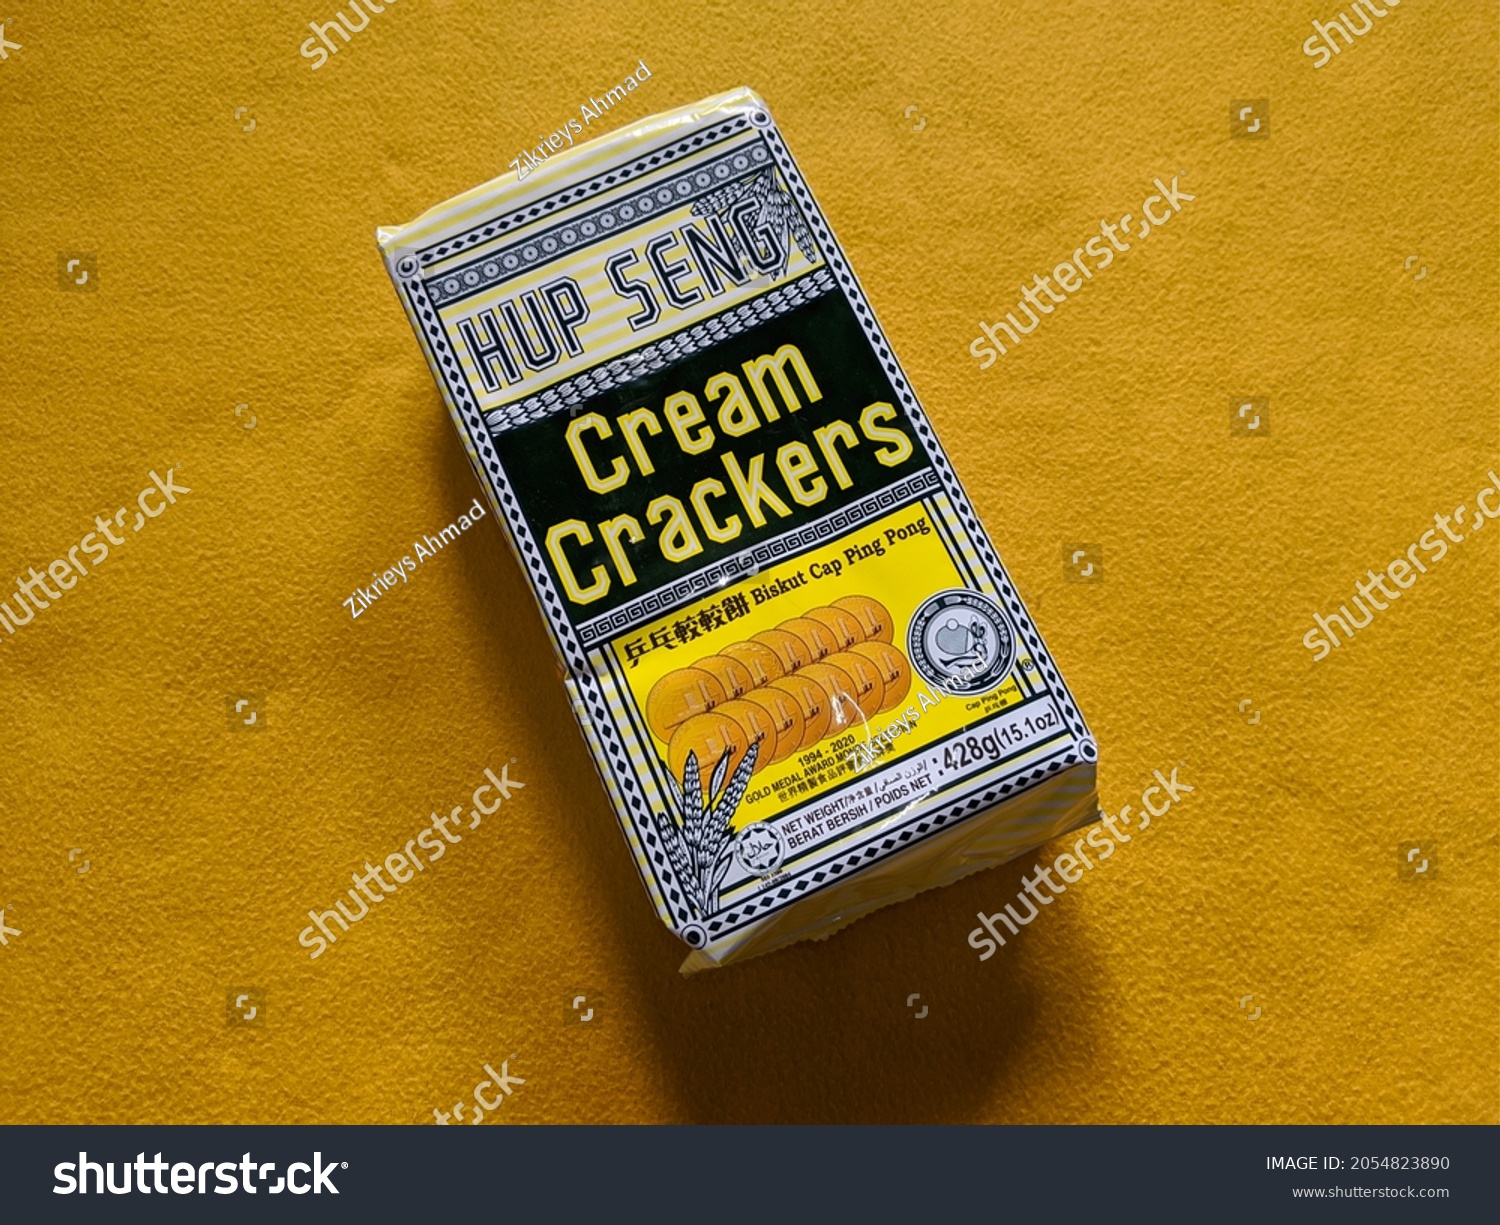 Hup seng special cream crackers